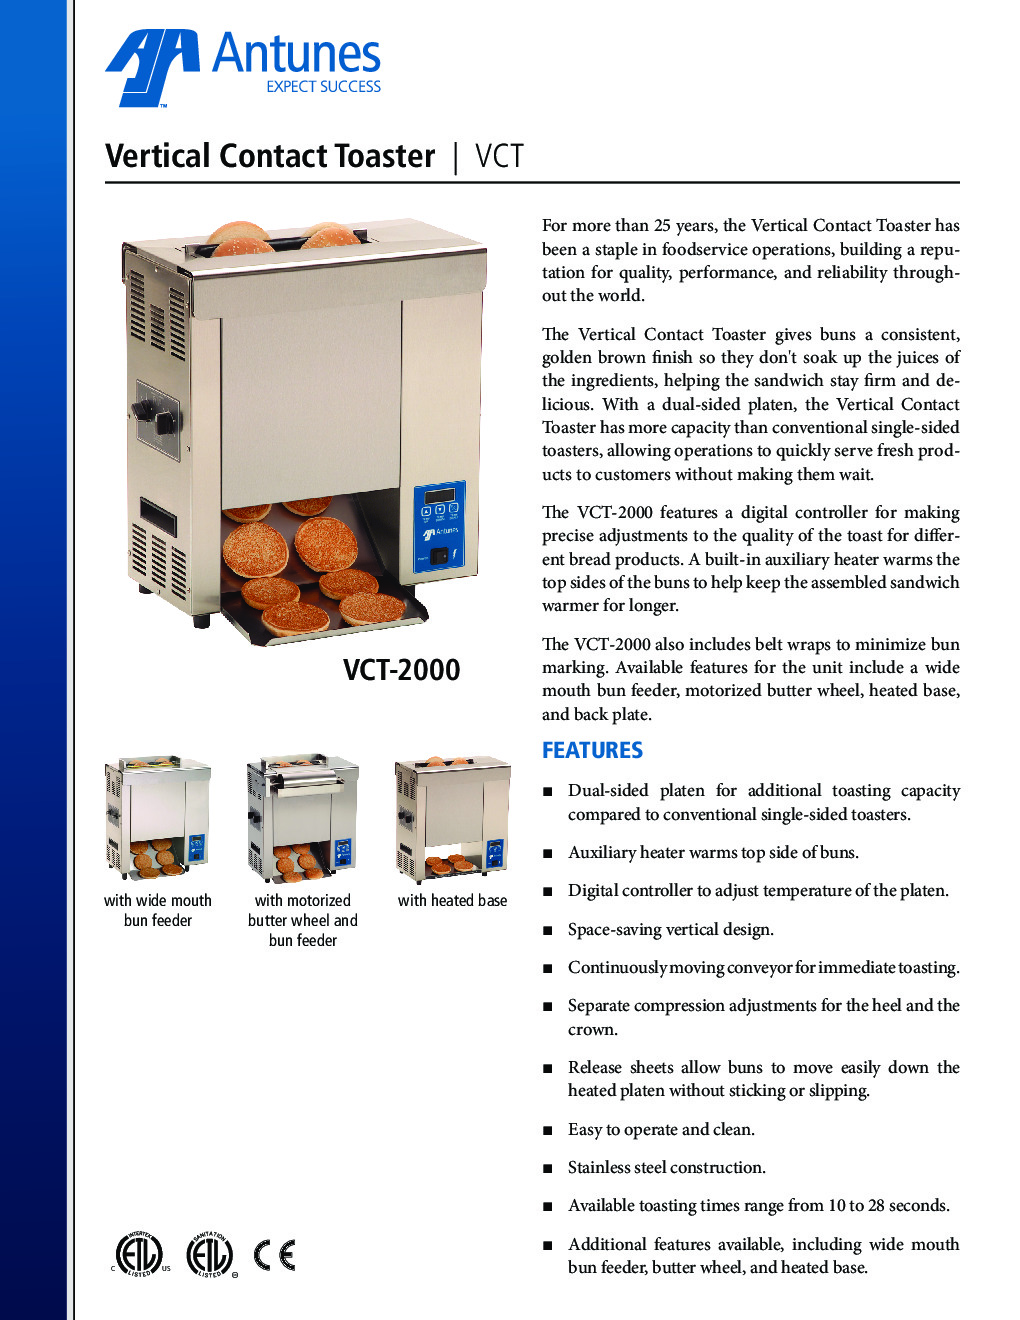 Antunes VCT-2000-9210300 Countertop Conveyor Type Vertical Contact Toaster